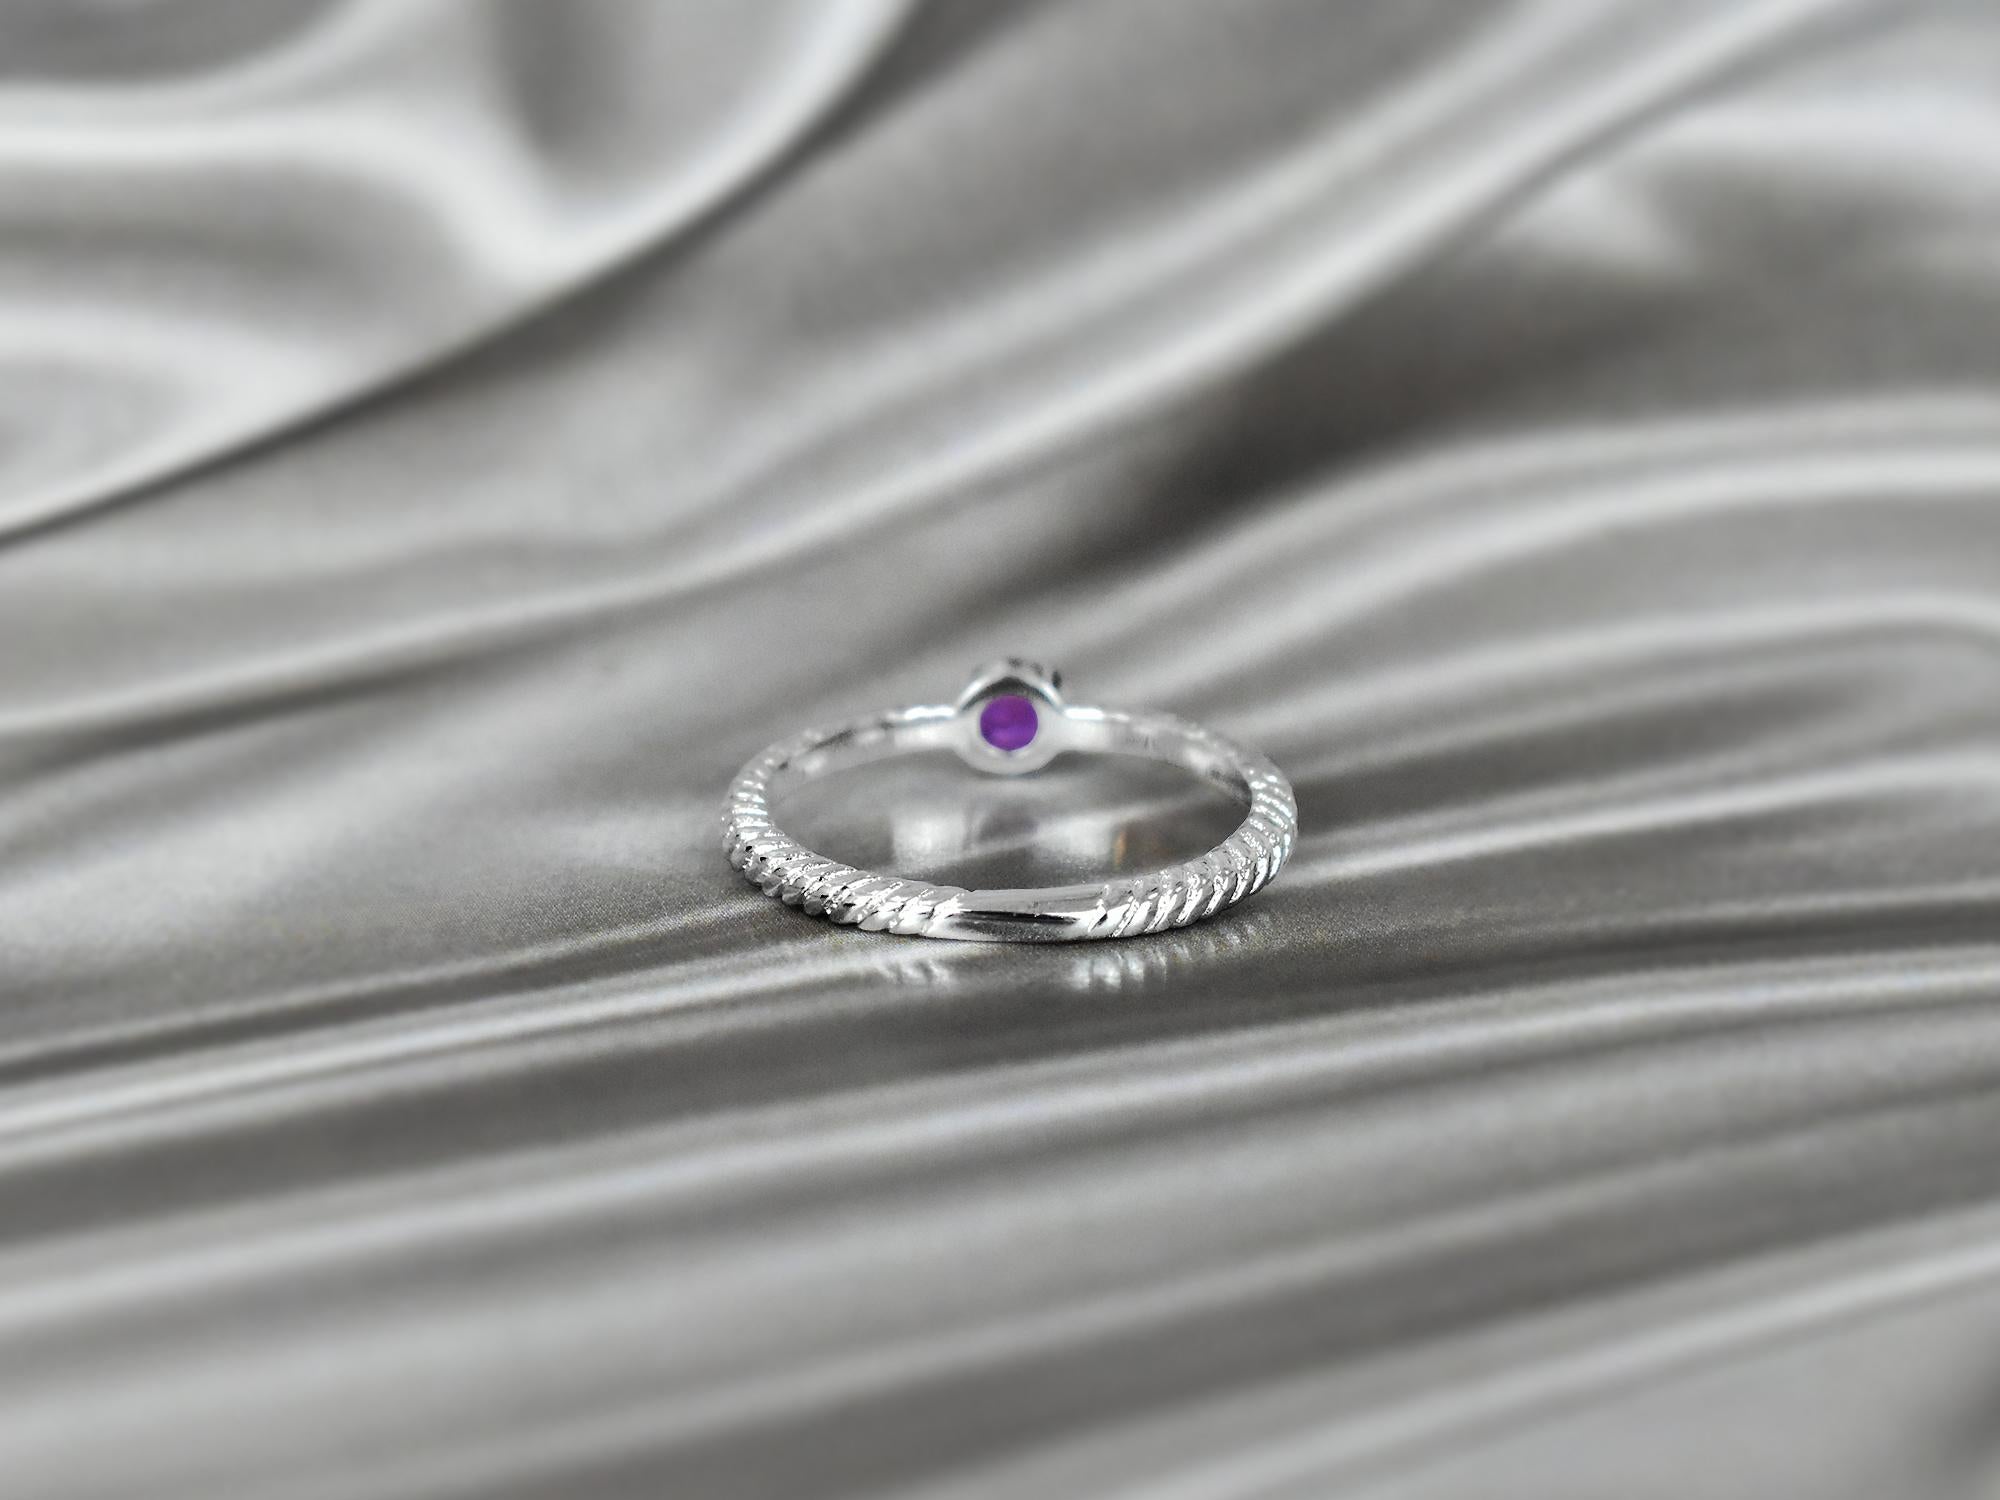 For Sale:  10k Gold Round Gemstone 3.5mm Round Gemstone Ring Birthstone Ring Stackable Ring 11